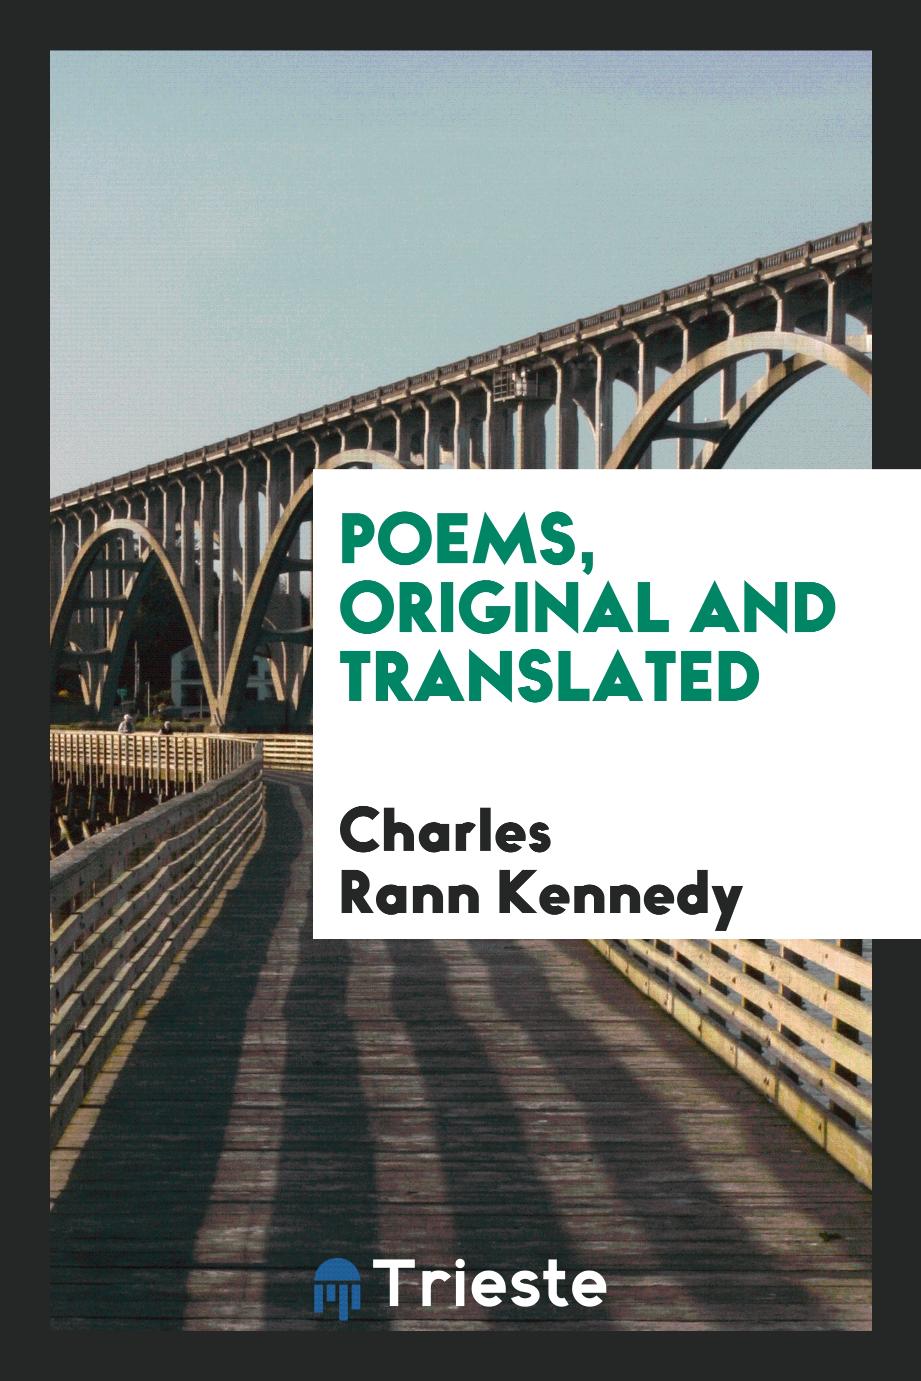 Poems, original and translated